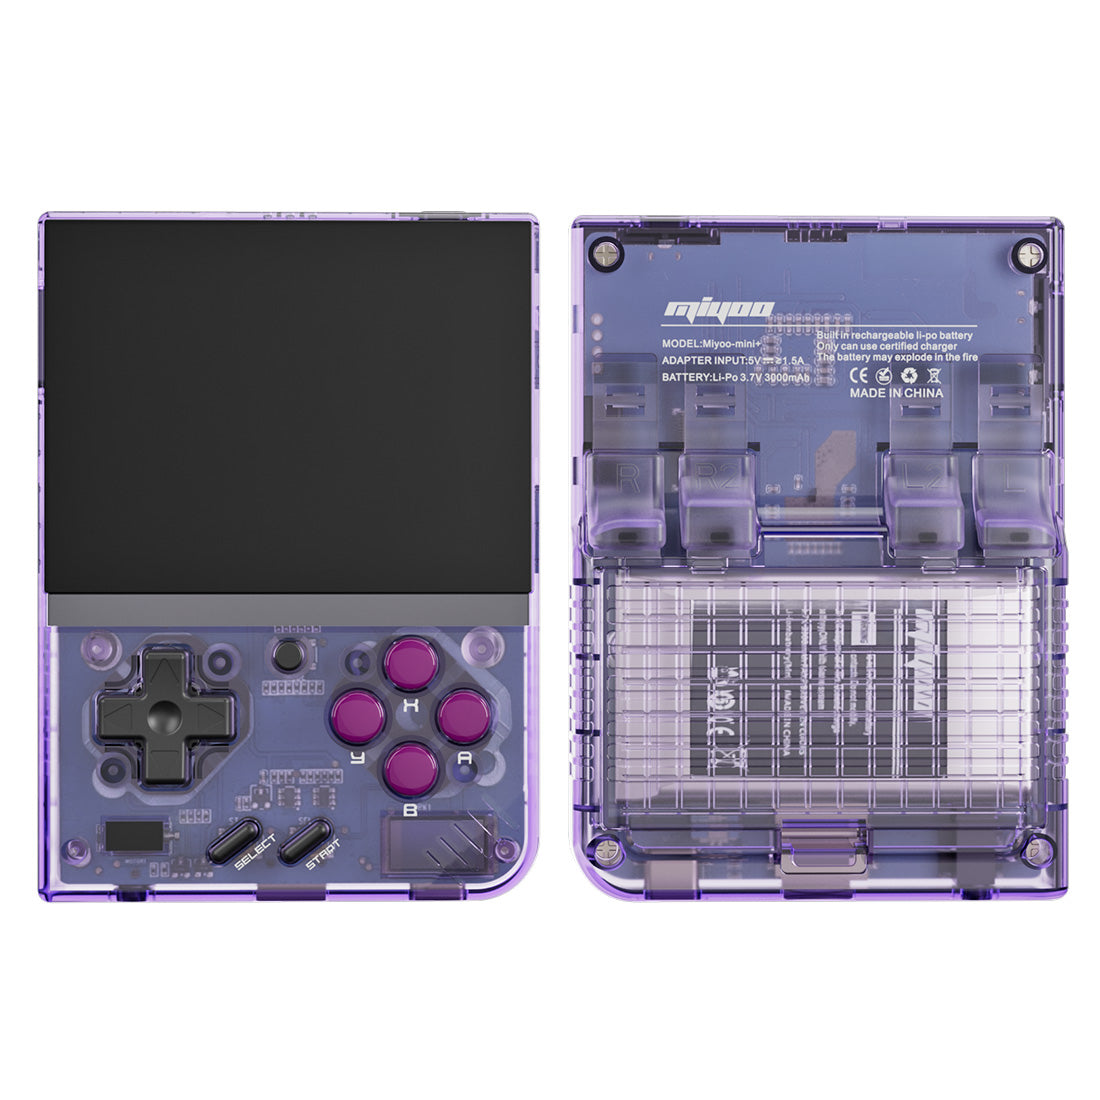 Miyoo Mini Plus 128G Onion OS Retro Handheld Game Console